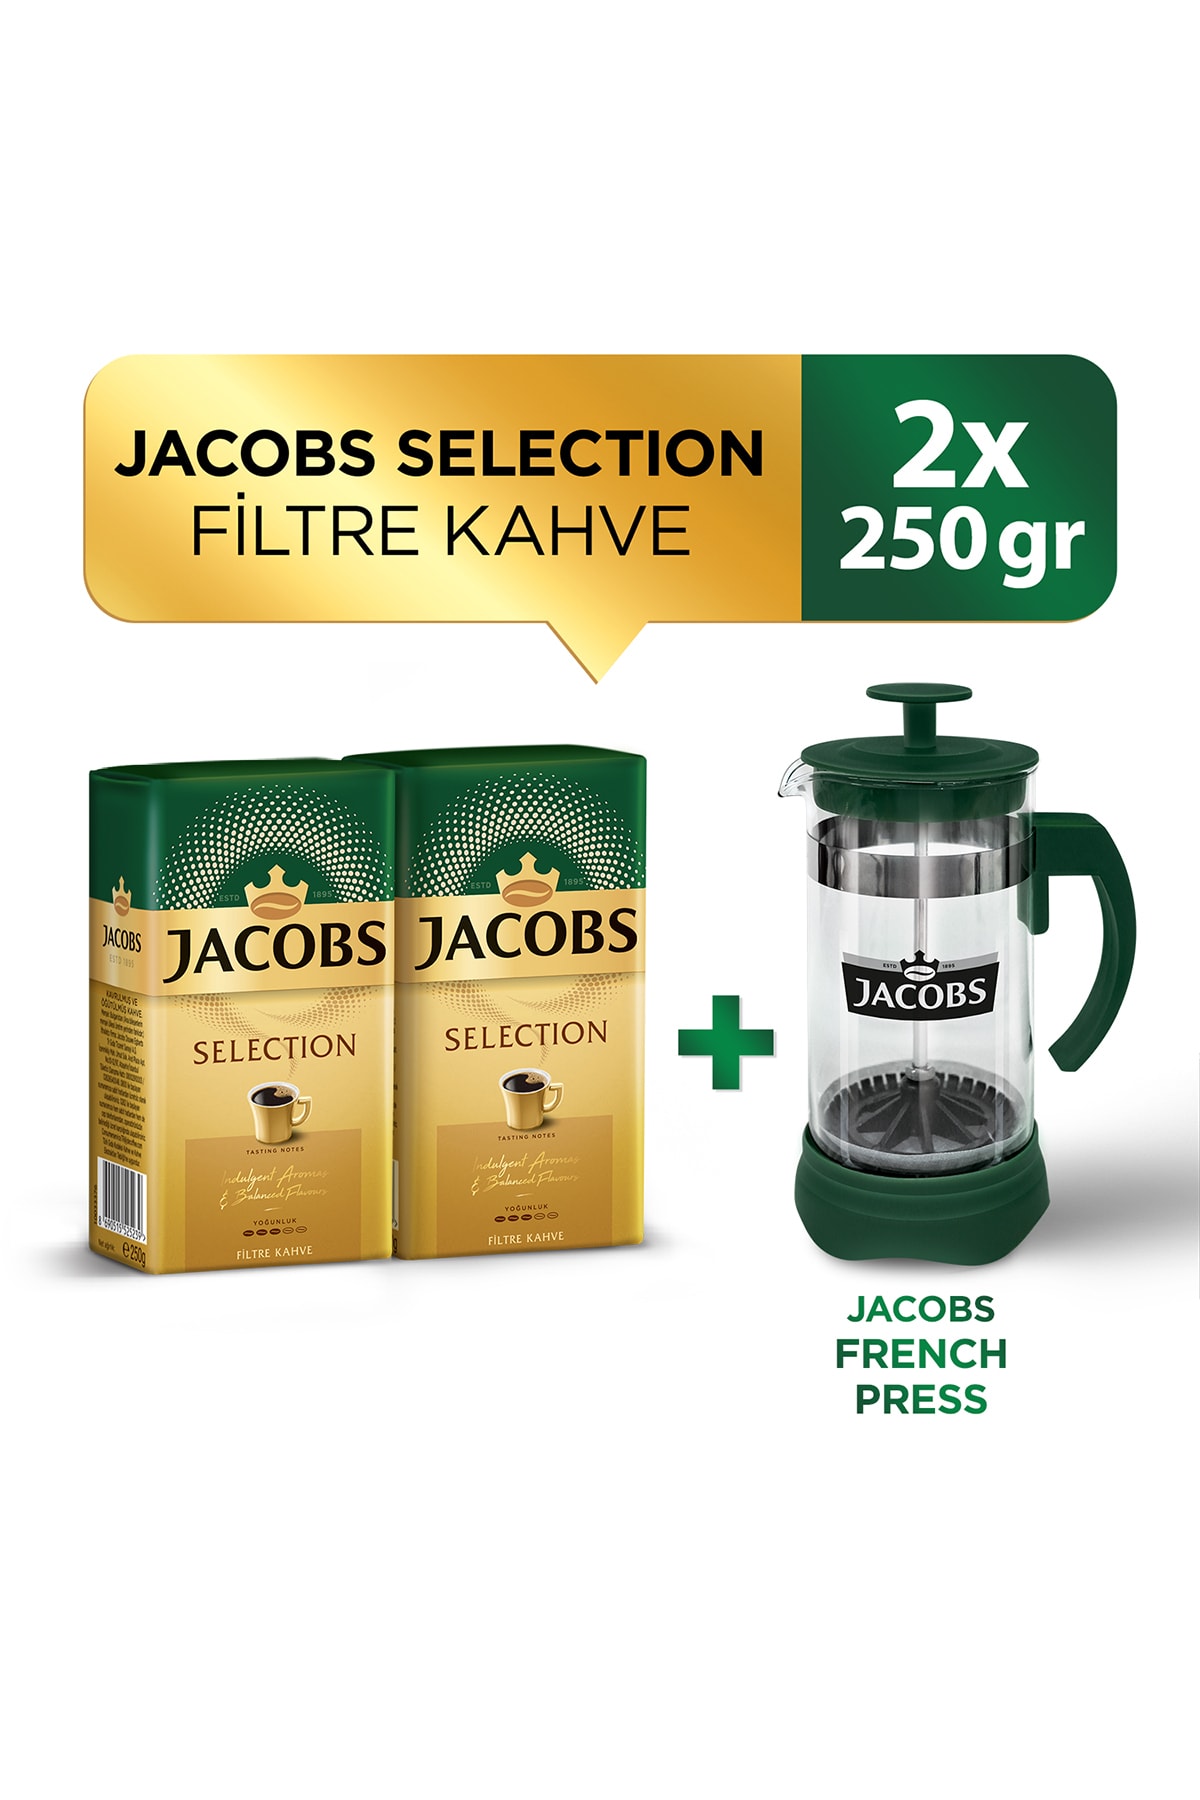 Jacobs Selection Filtre Kahve 250 Gr X 2 Adet + French Press Hediyeli